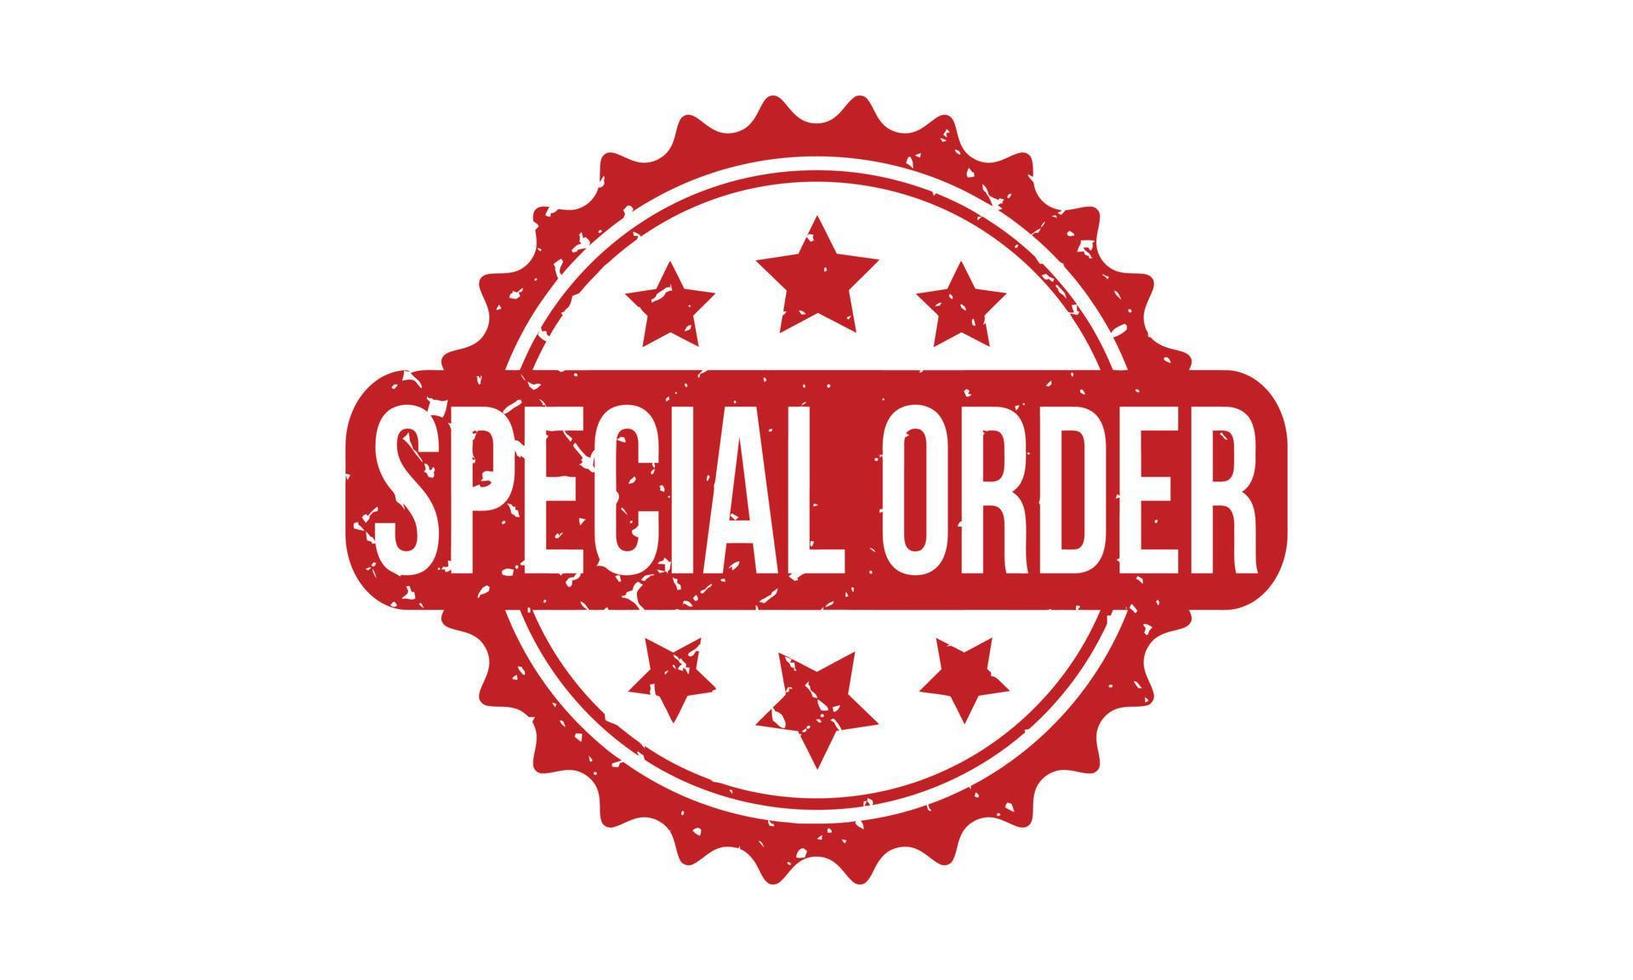 Special Order Rubber Stamp. Red Special Order Rubber Grunge Stamp Seal Vector Illustration